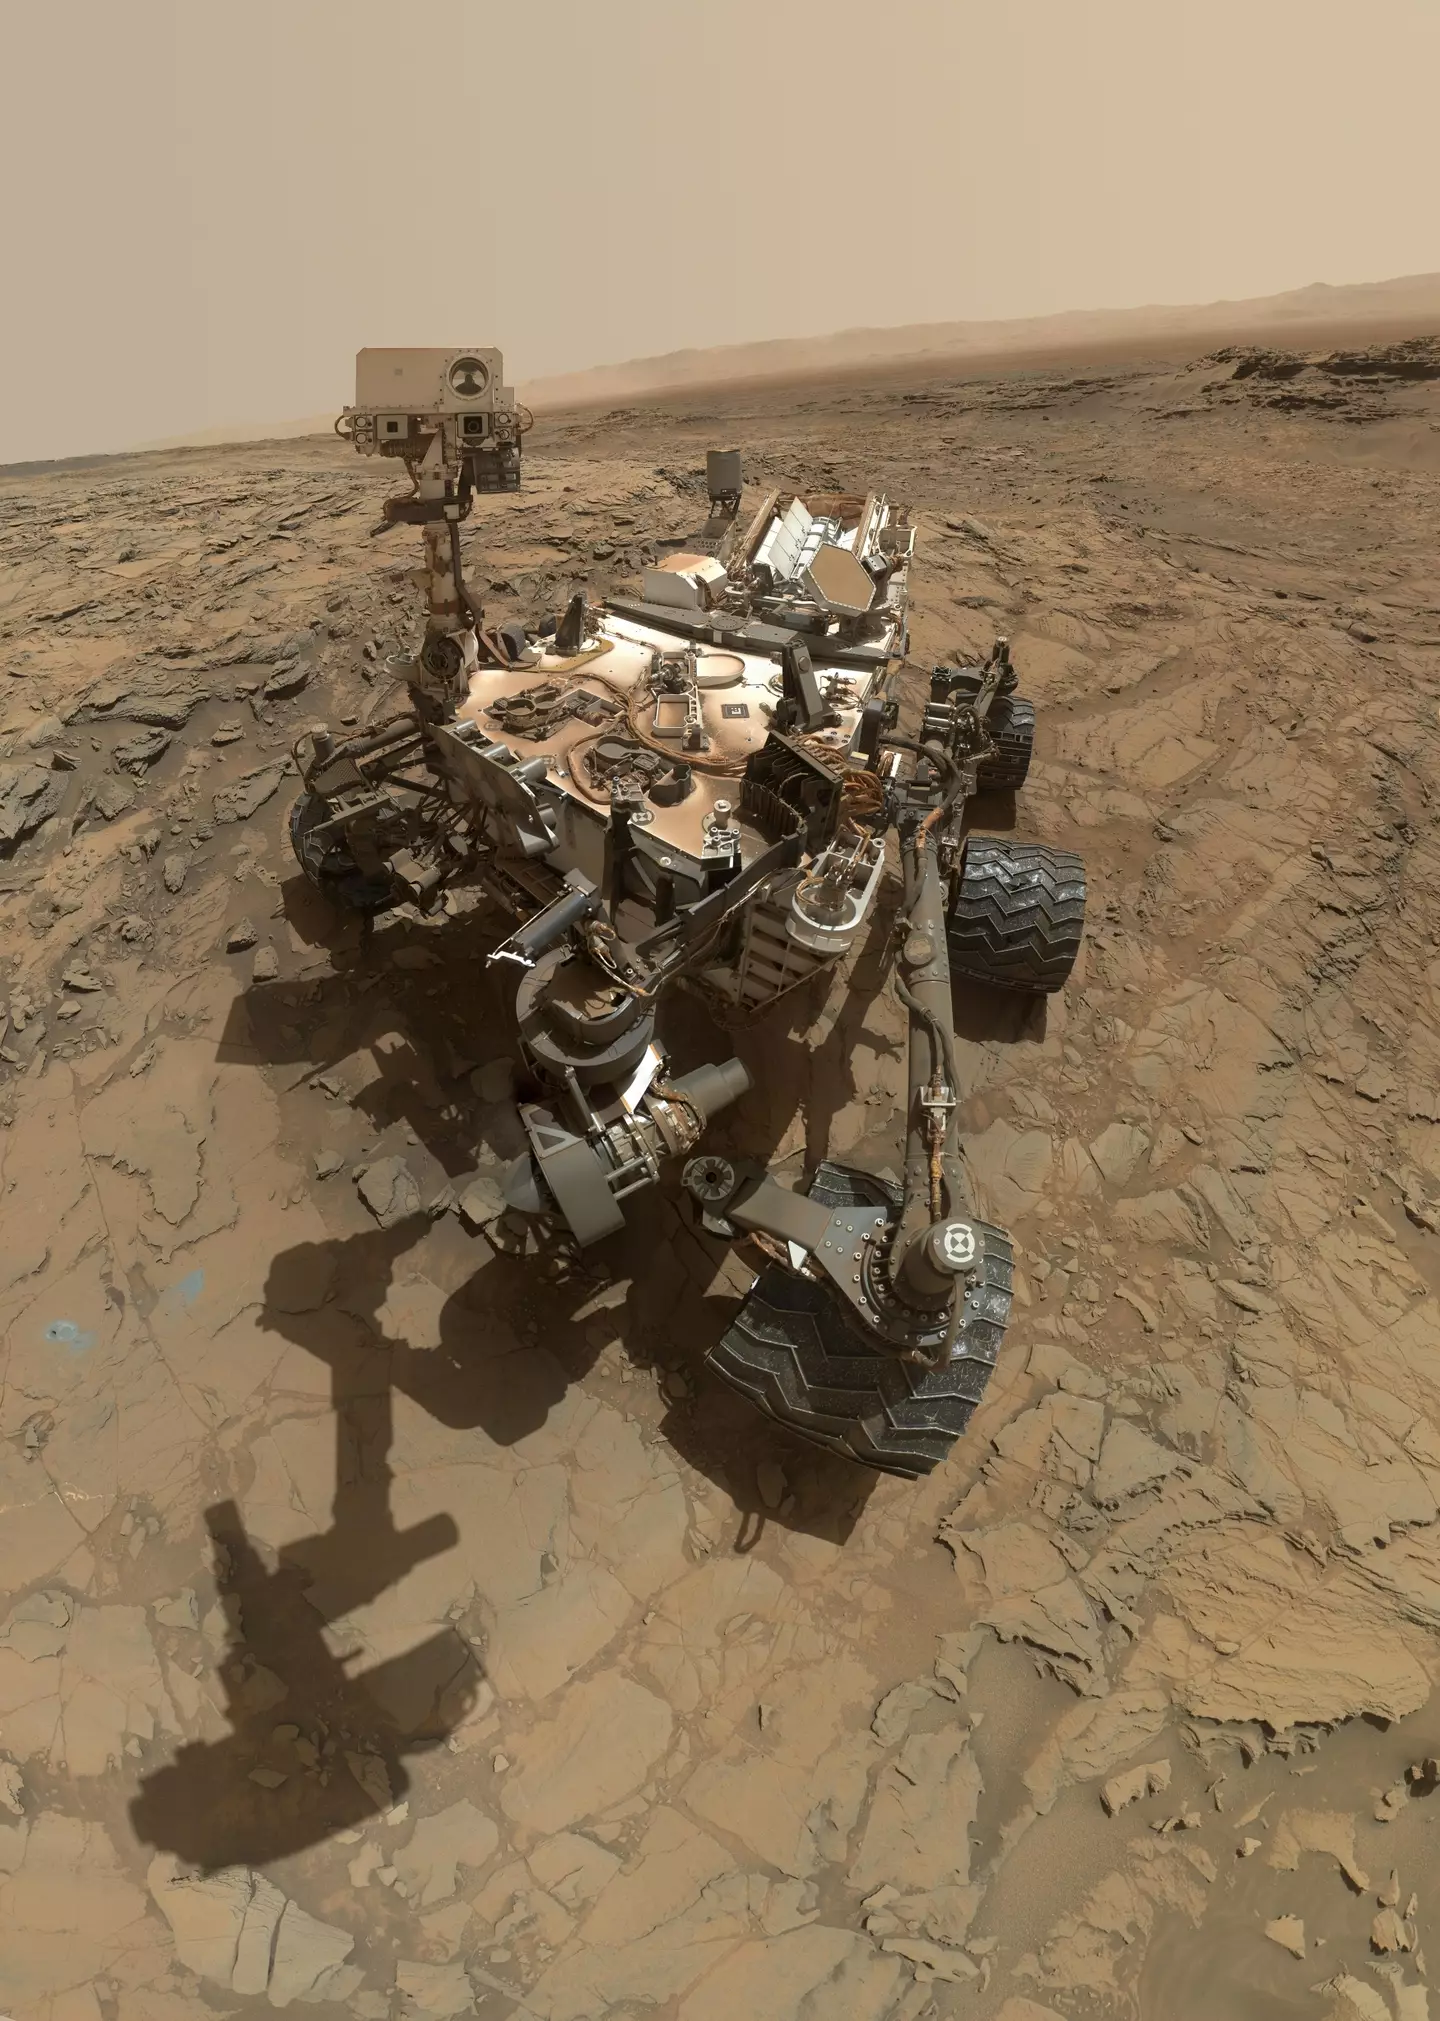 NASA's Curiosity rover has been exploring Mars for 10 years.